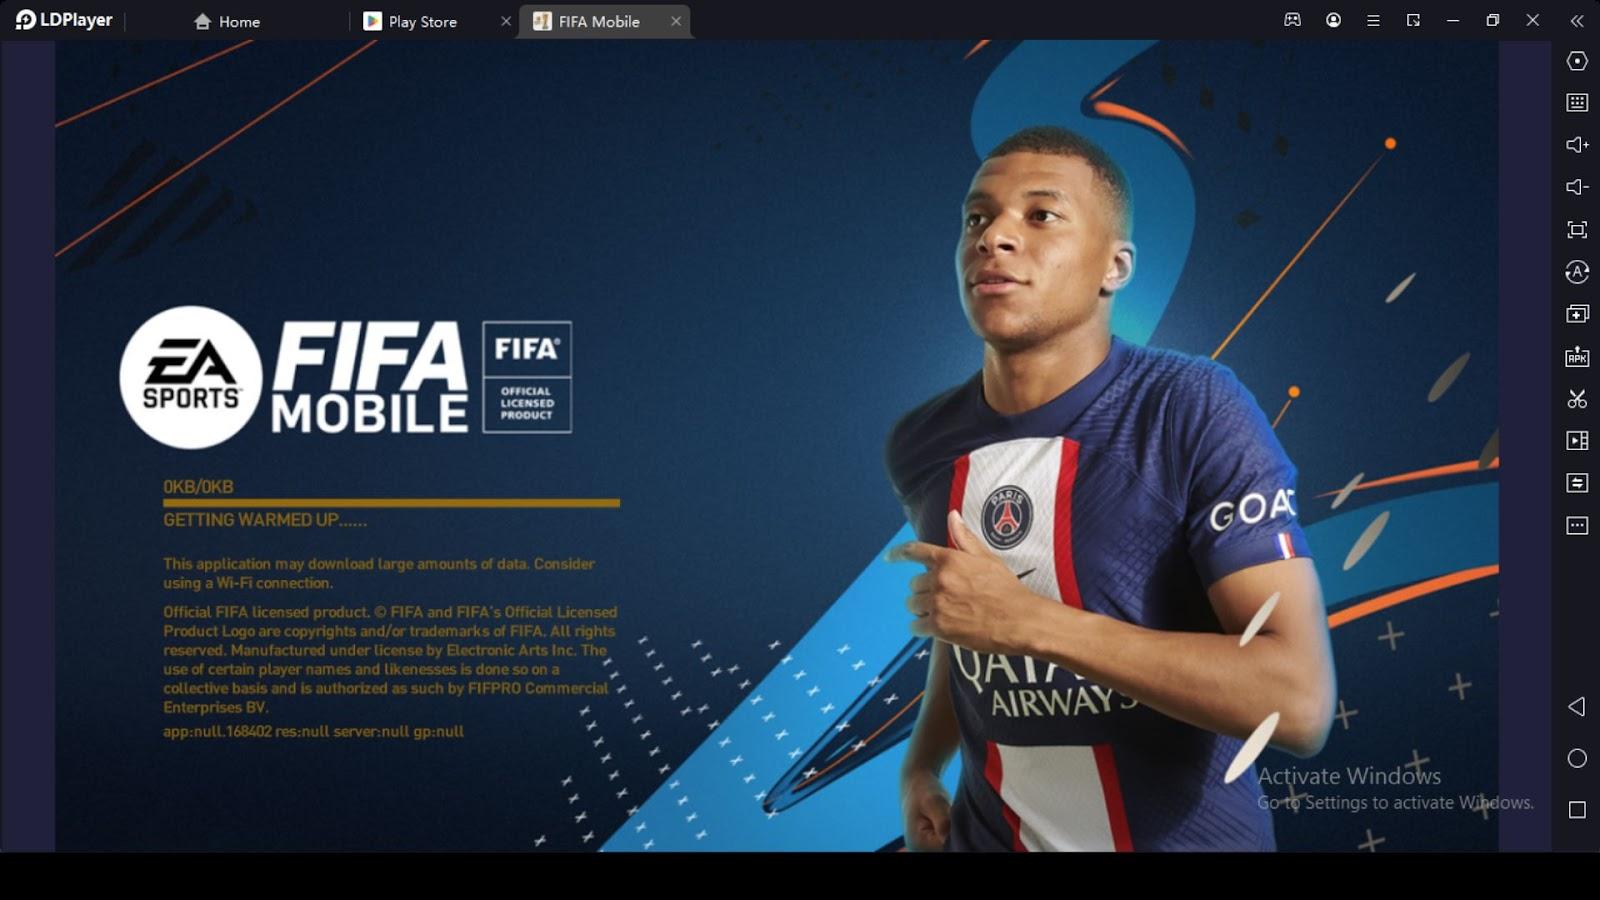 FIFA Mobile: FIFA World Cup